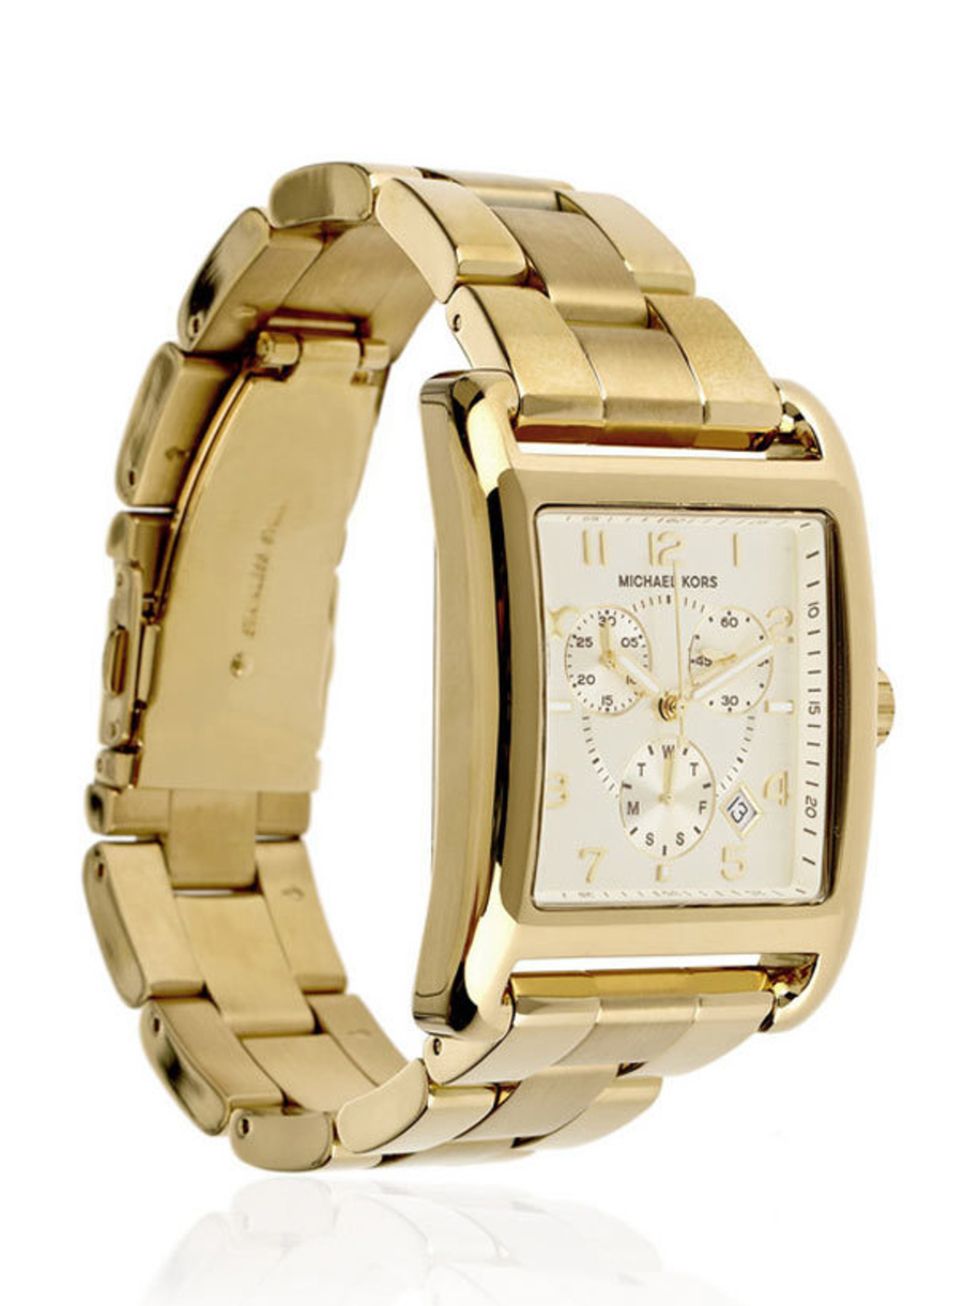 <p>Michael Kors chronograph watch, £220, at <a href="http://www.net-a-porter.com/product/162048">Net-a-Porter</a></p>